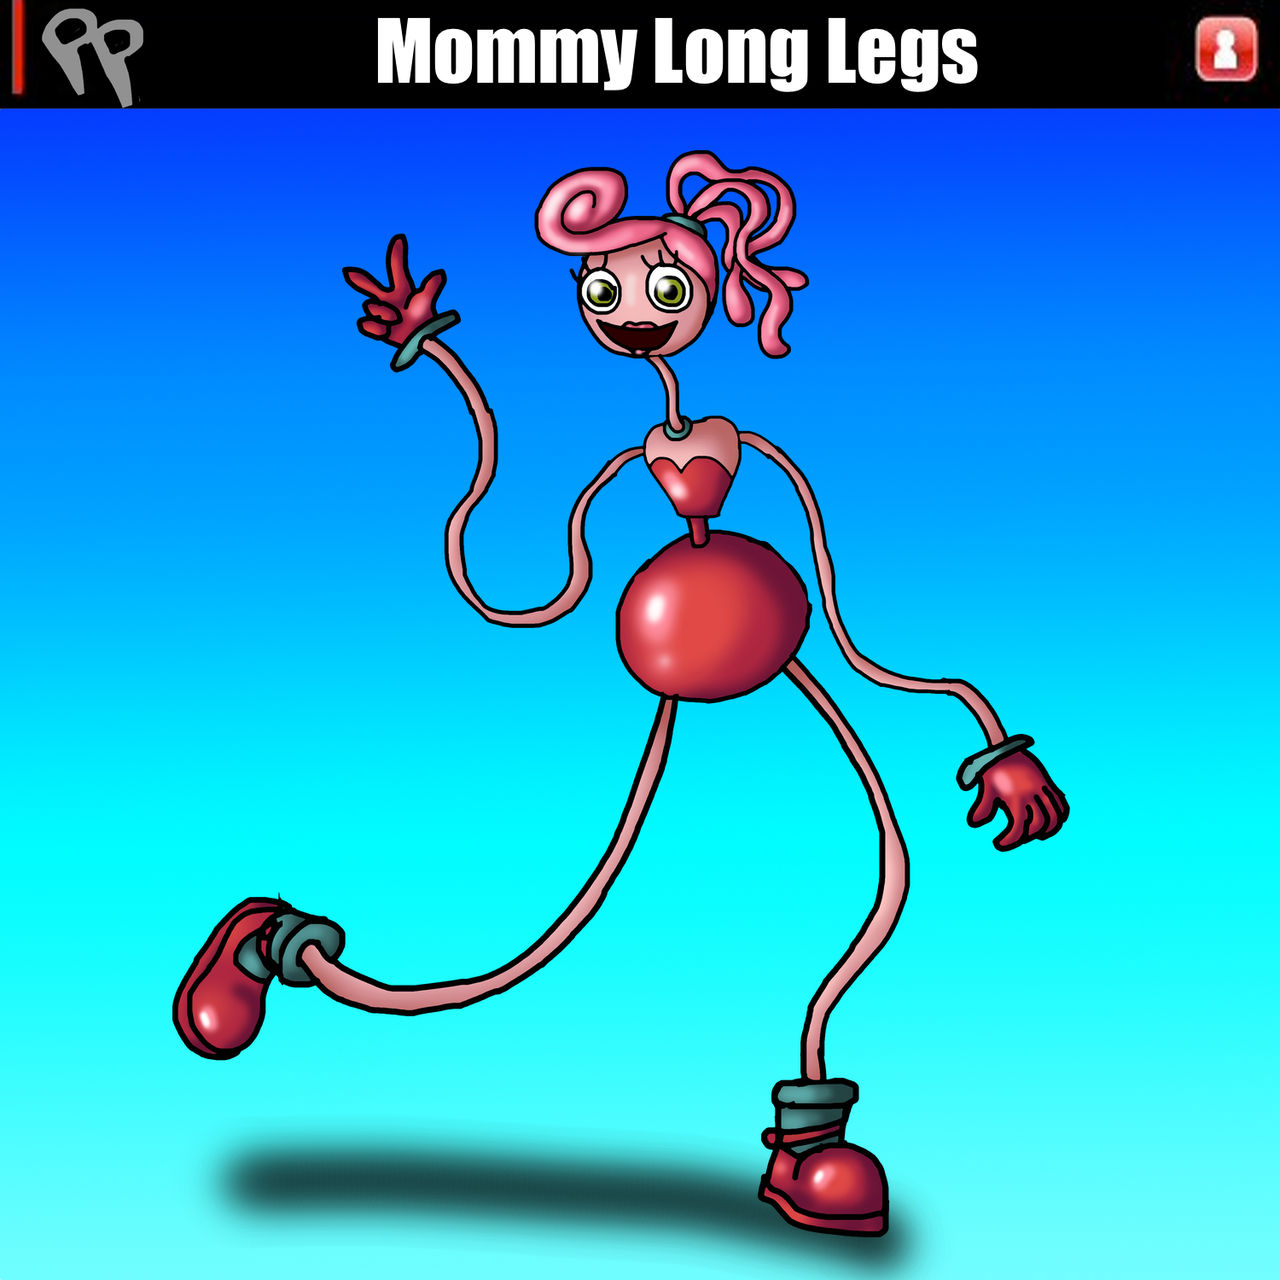 Mommy Long Legs- Poppy Playtime Fanart by RWGN on DeviantArt